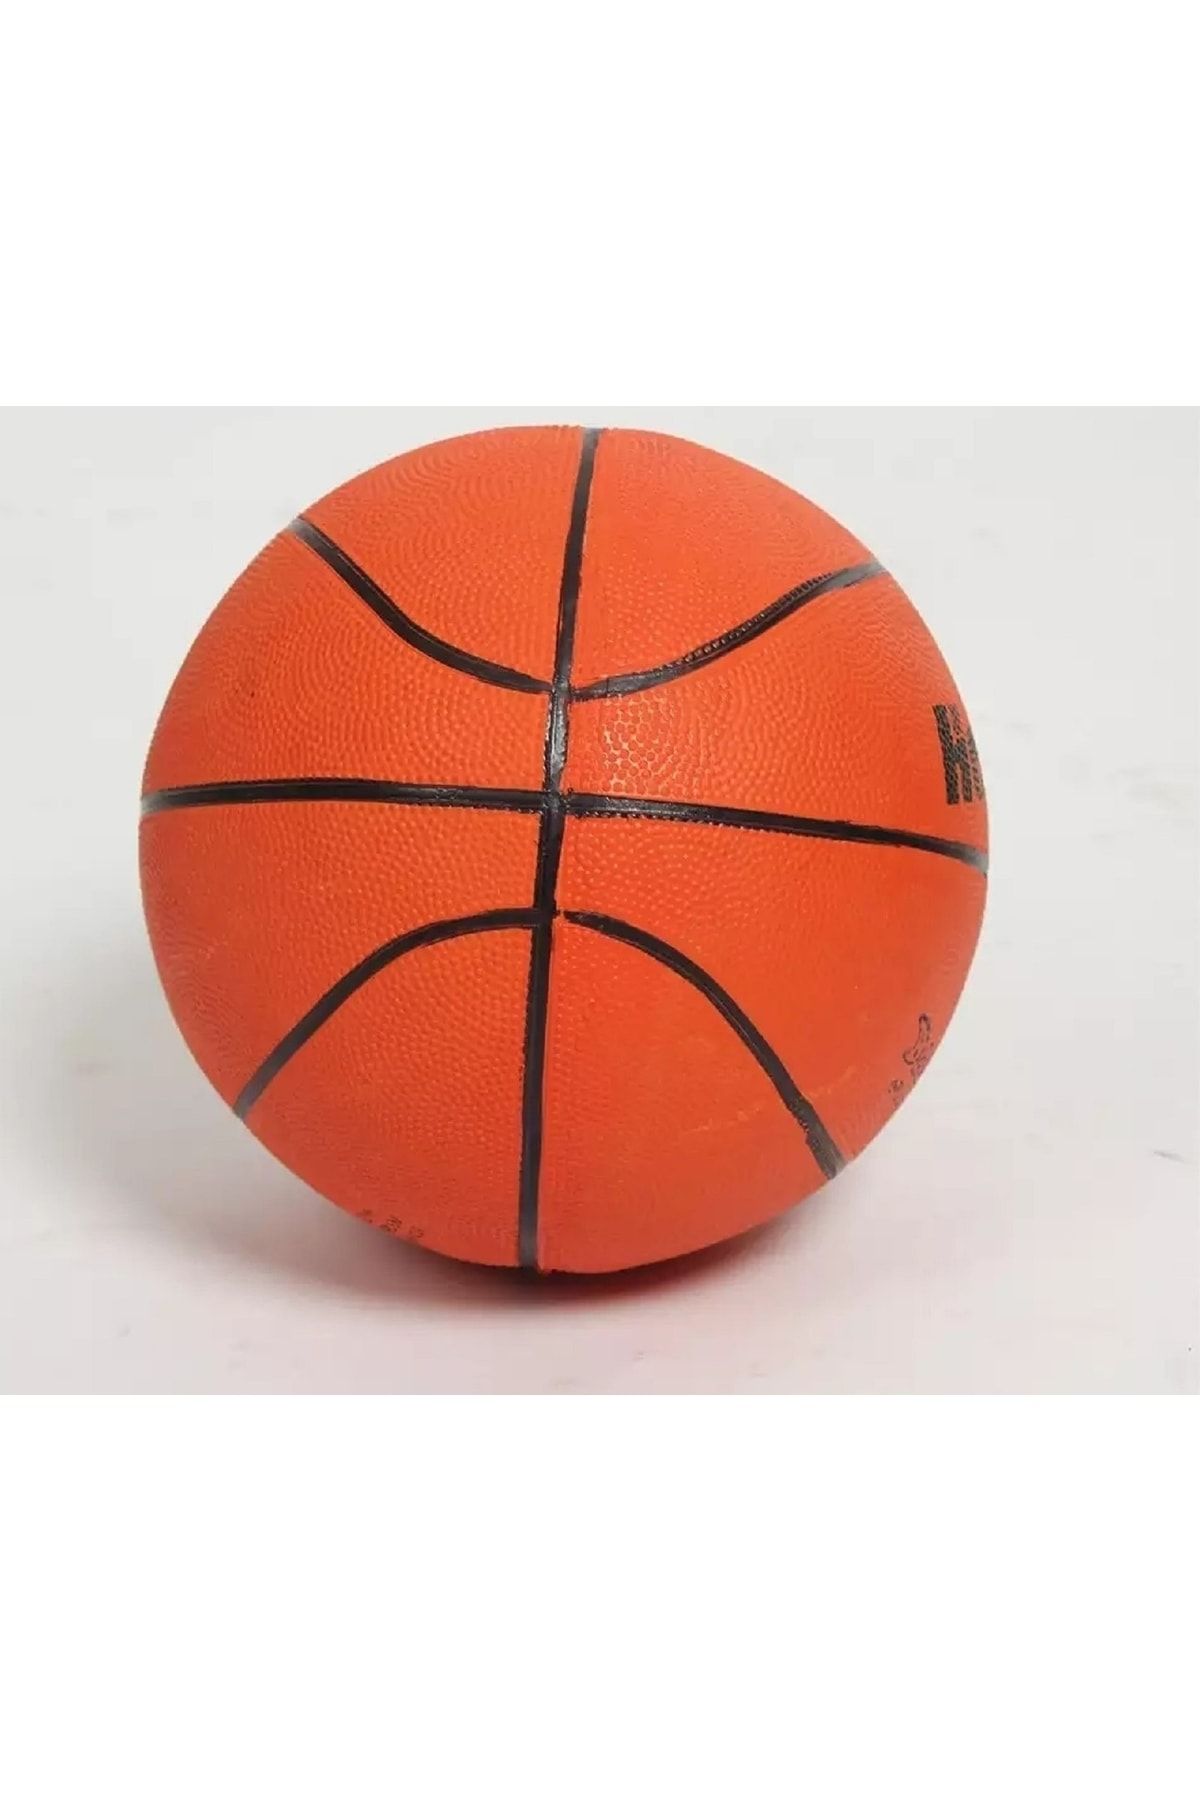 Janva Süper Basket Topu 7 Numara Basketbol Topu Yeni Model Sağlam Kaliteli